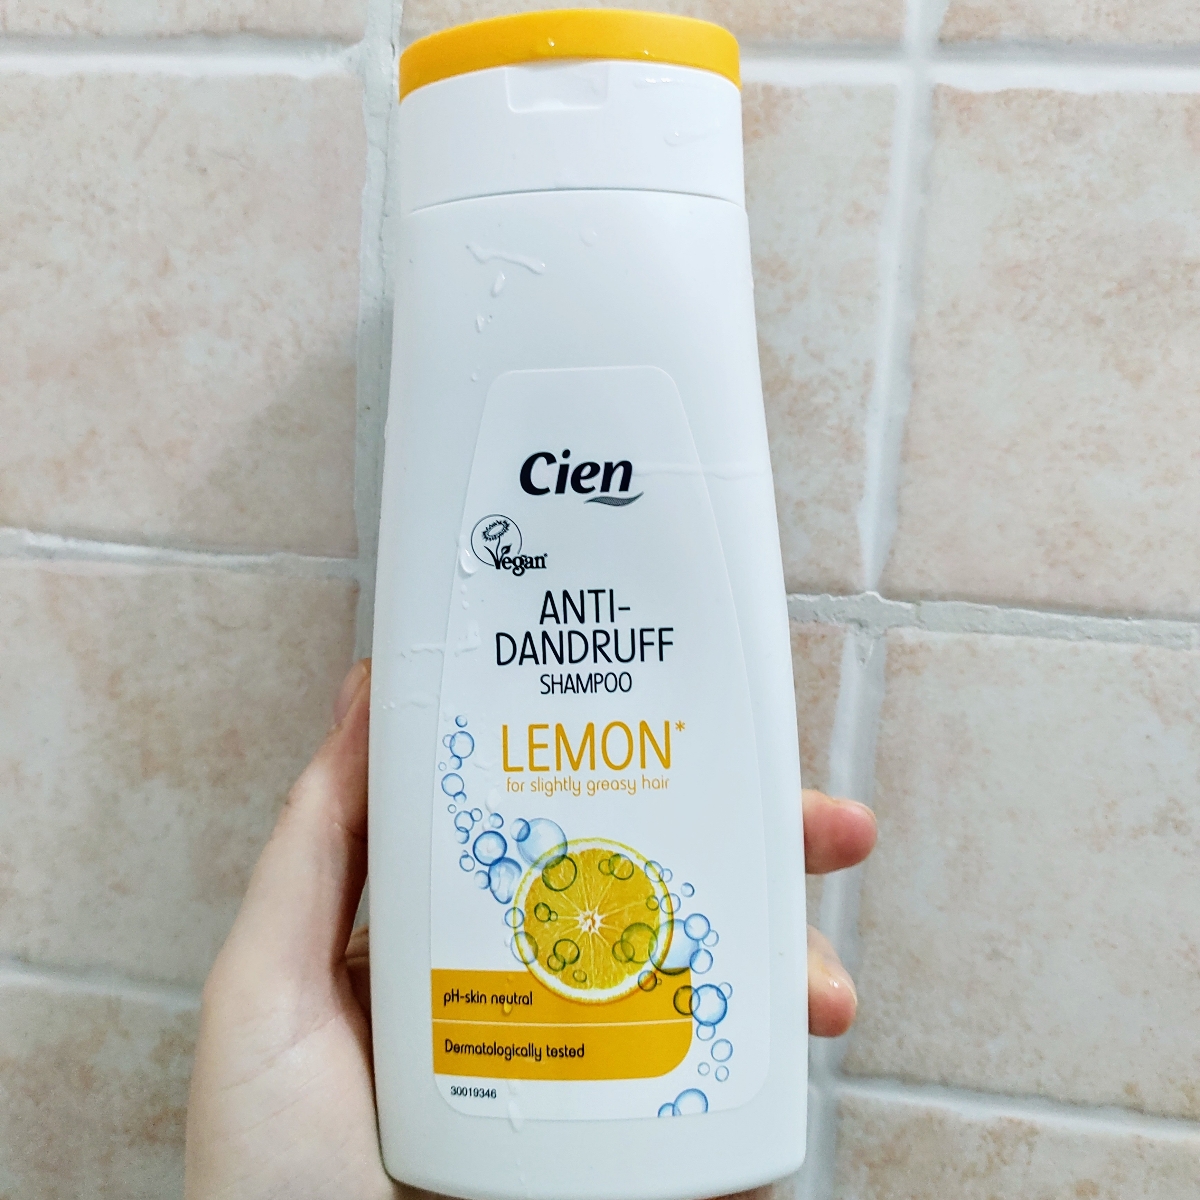 Cien Shampoo Anti-dandruff Lemon Reviews | abillion